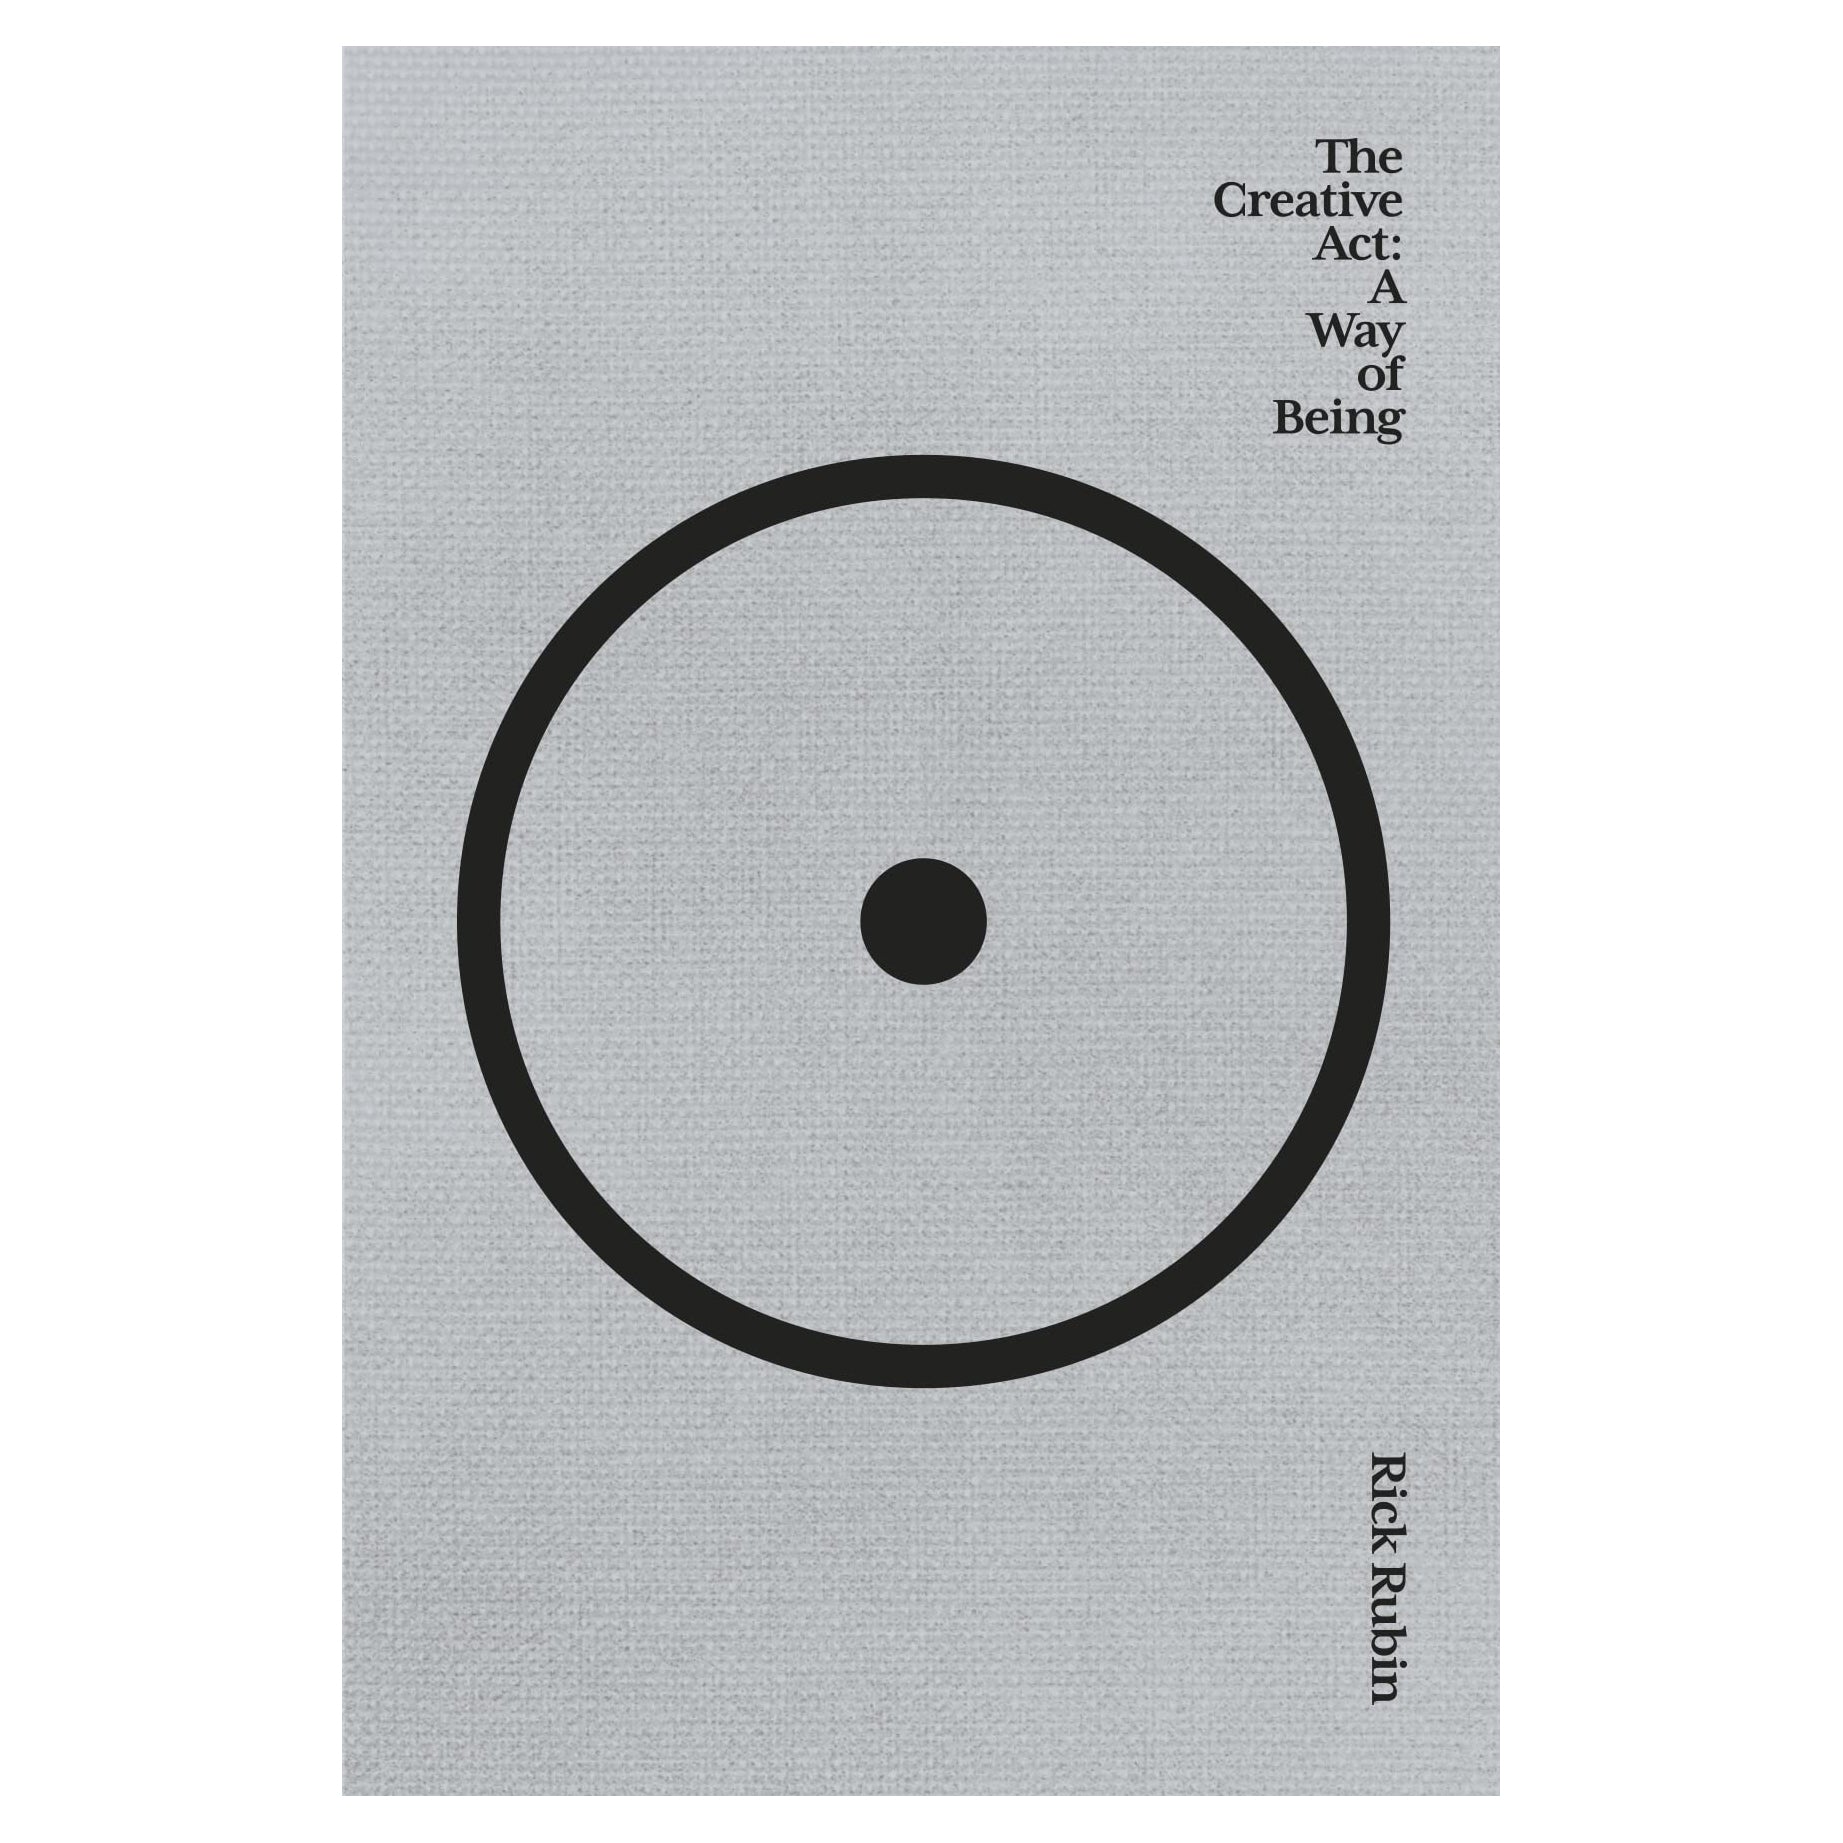 Not a book review… The Creative Act by Rick Rubin. #thecreativeact #ri